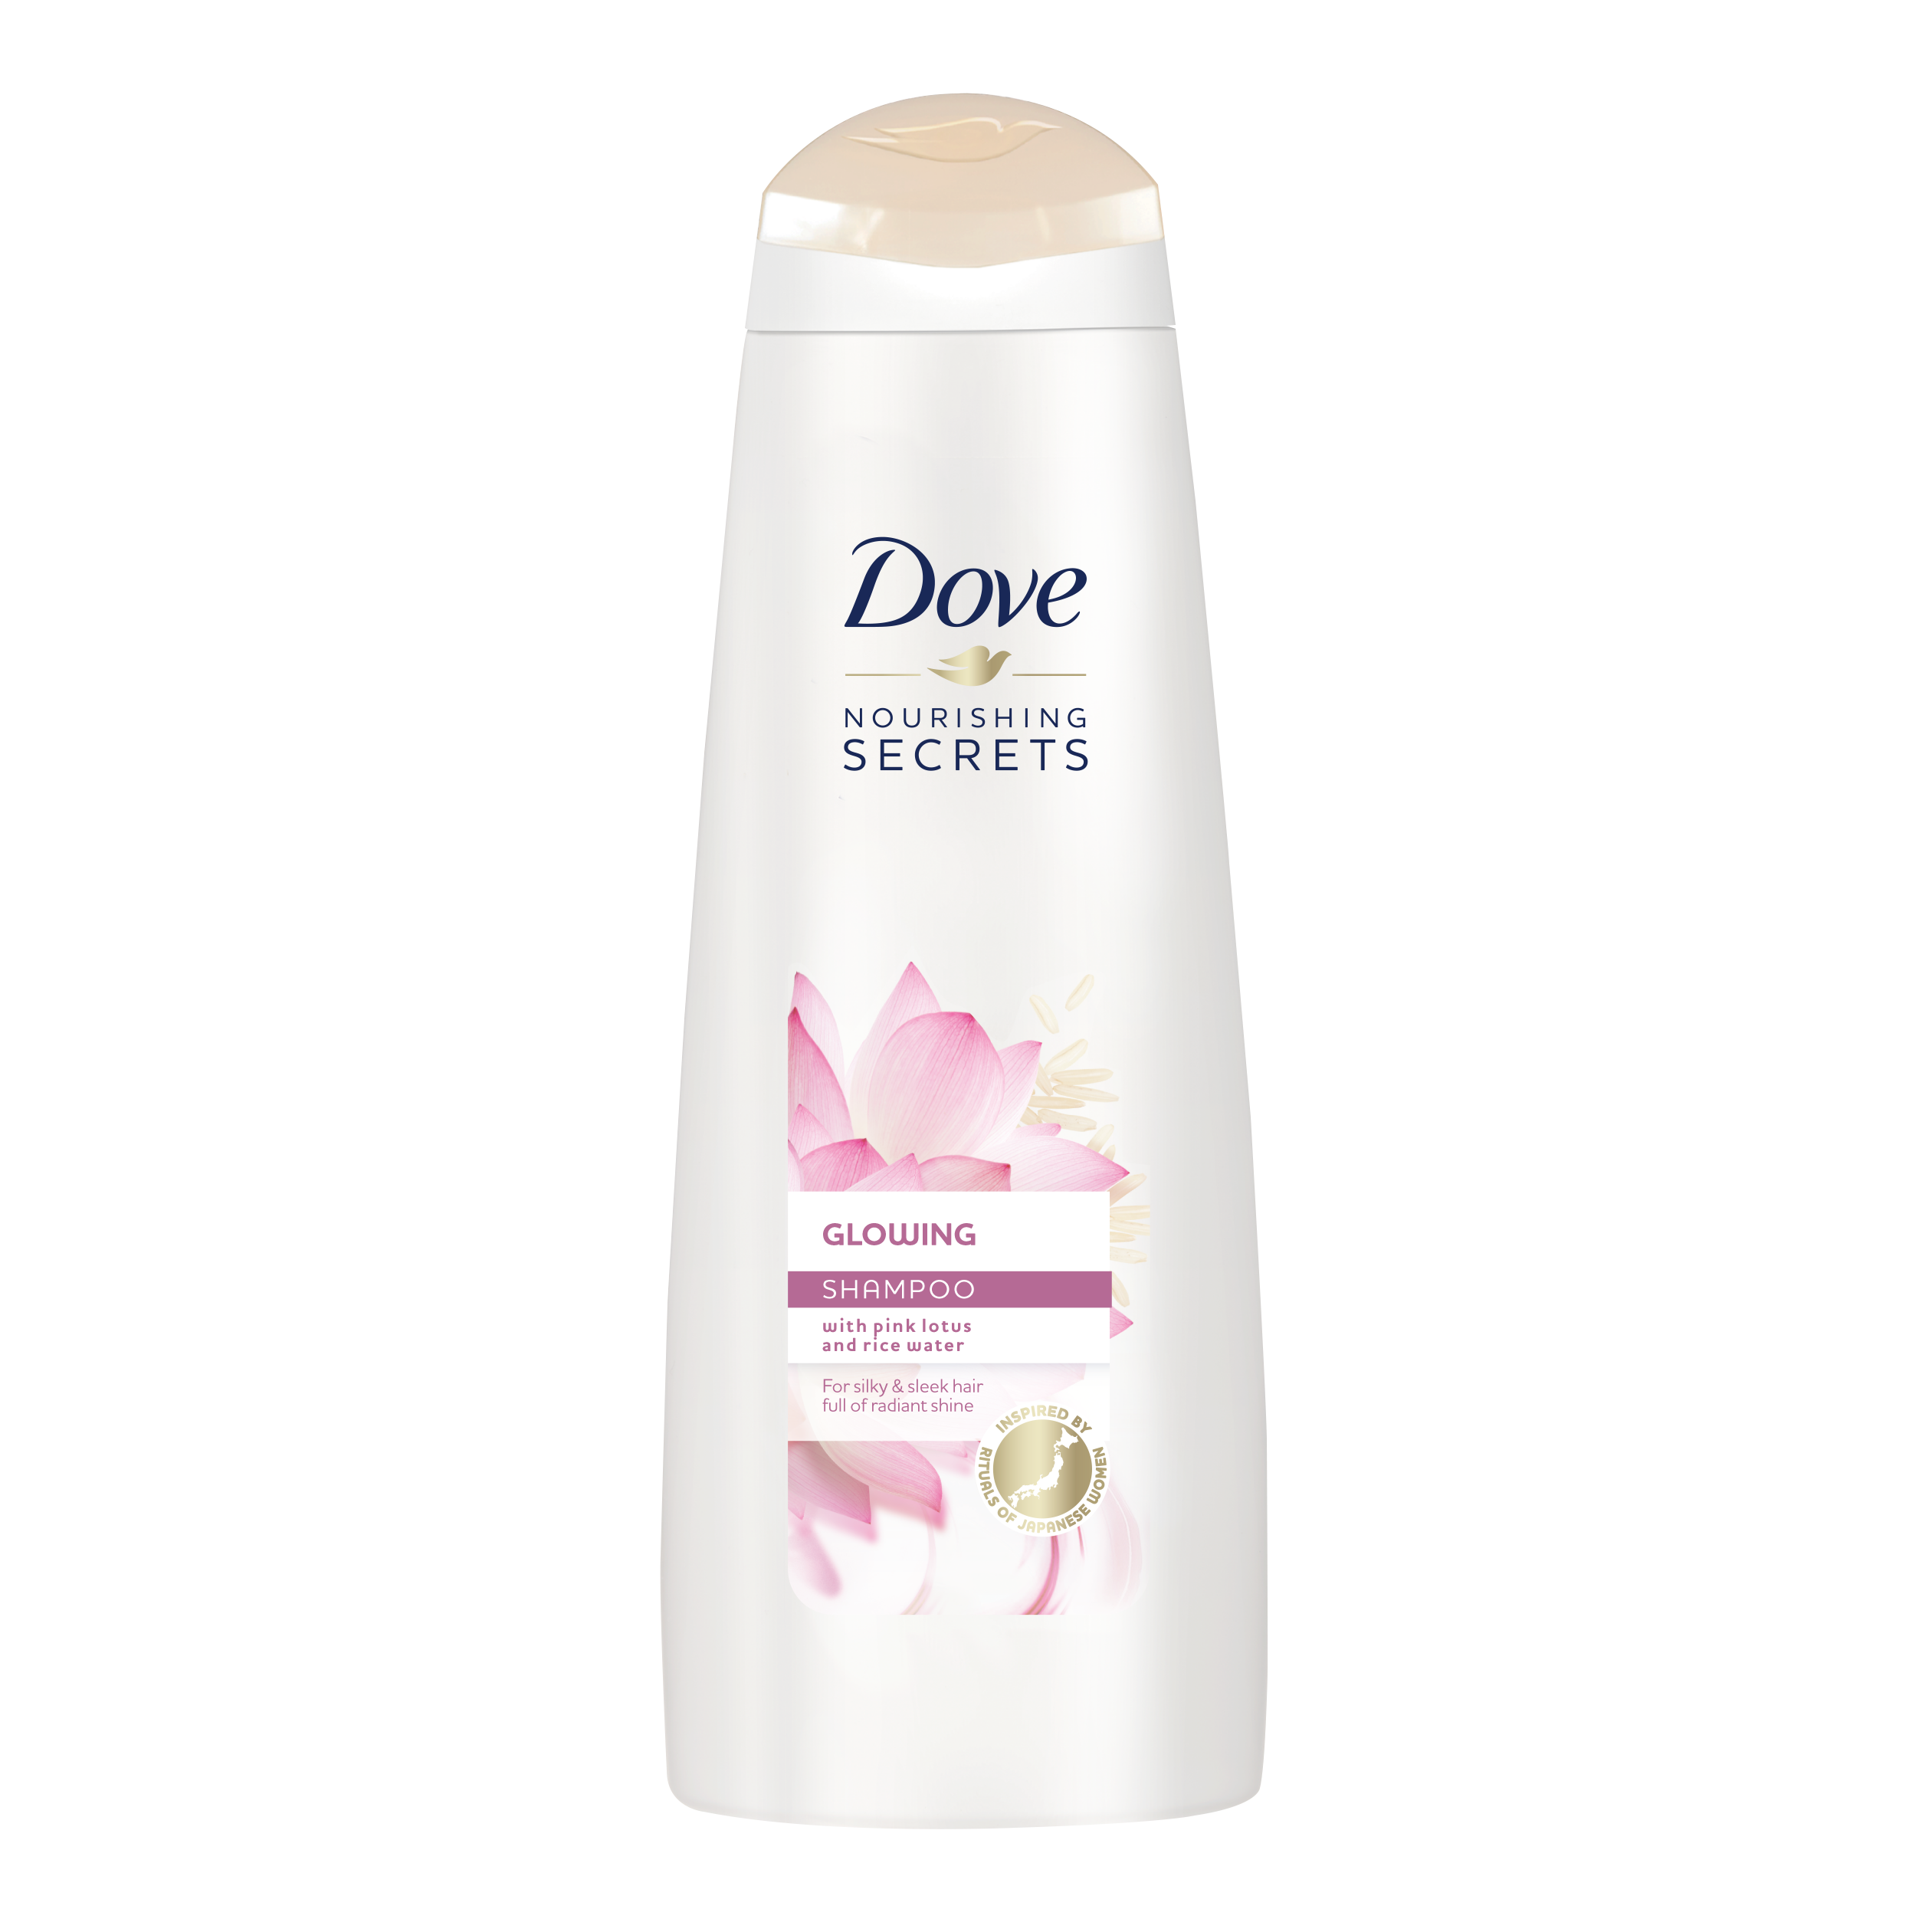 Dove Nourishing Secrets Glowing Shampoo